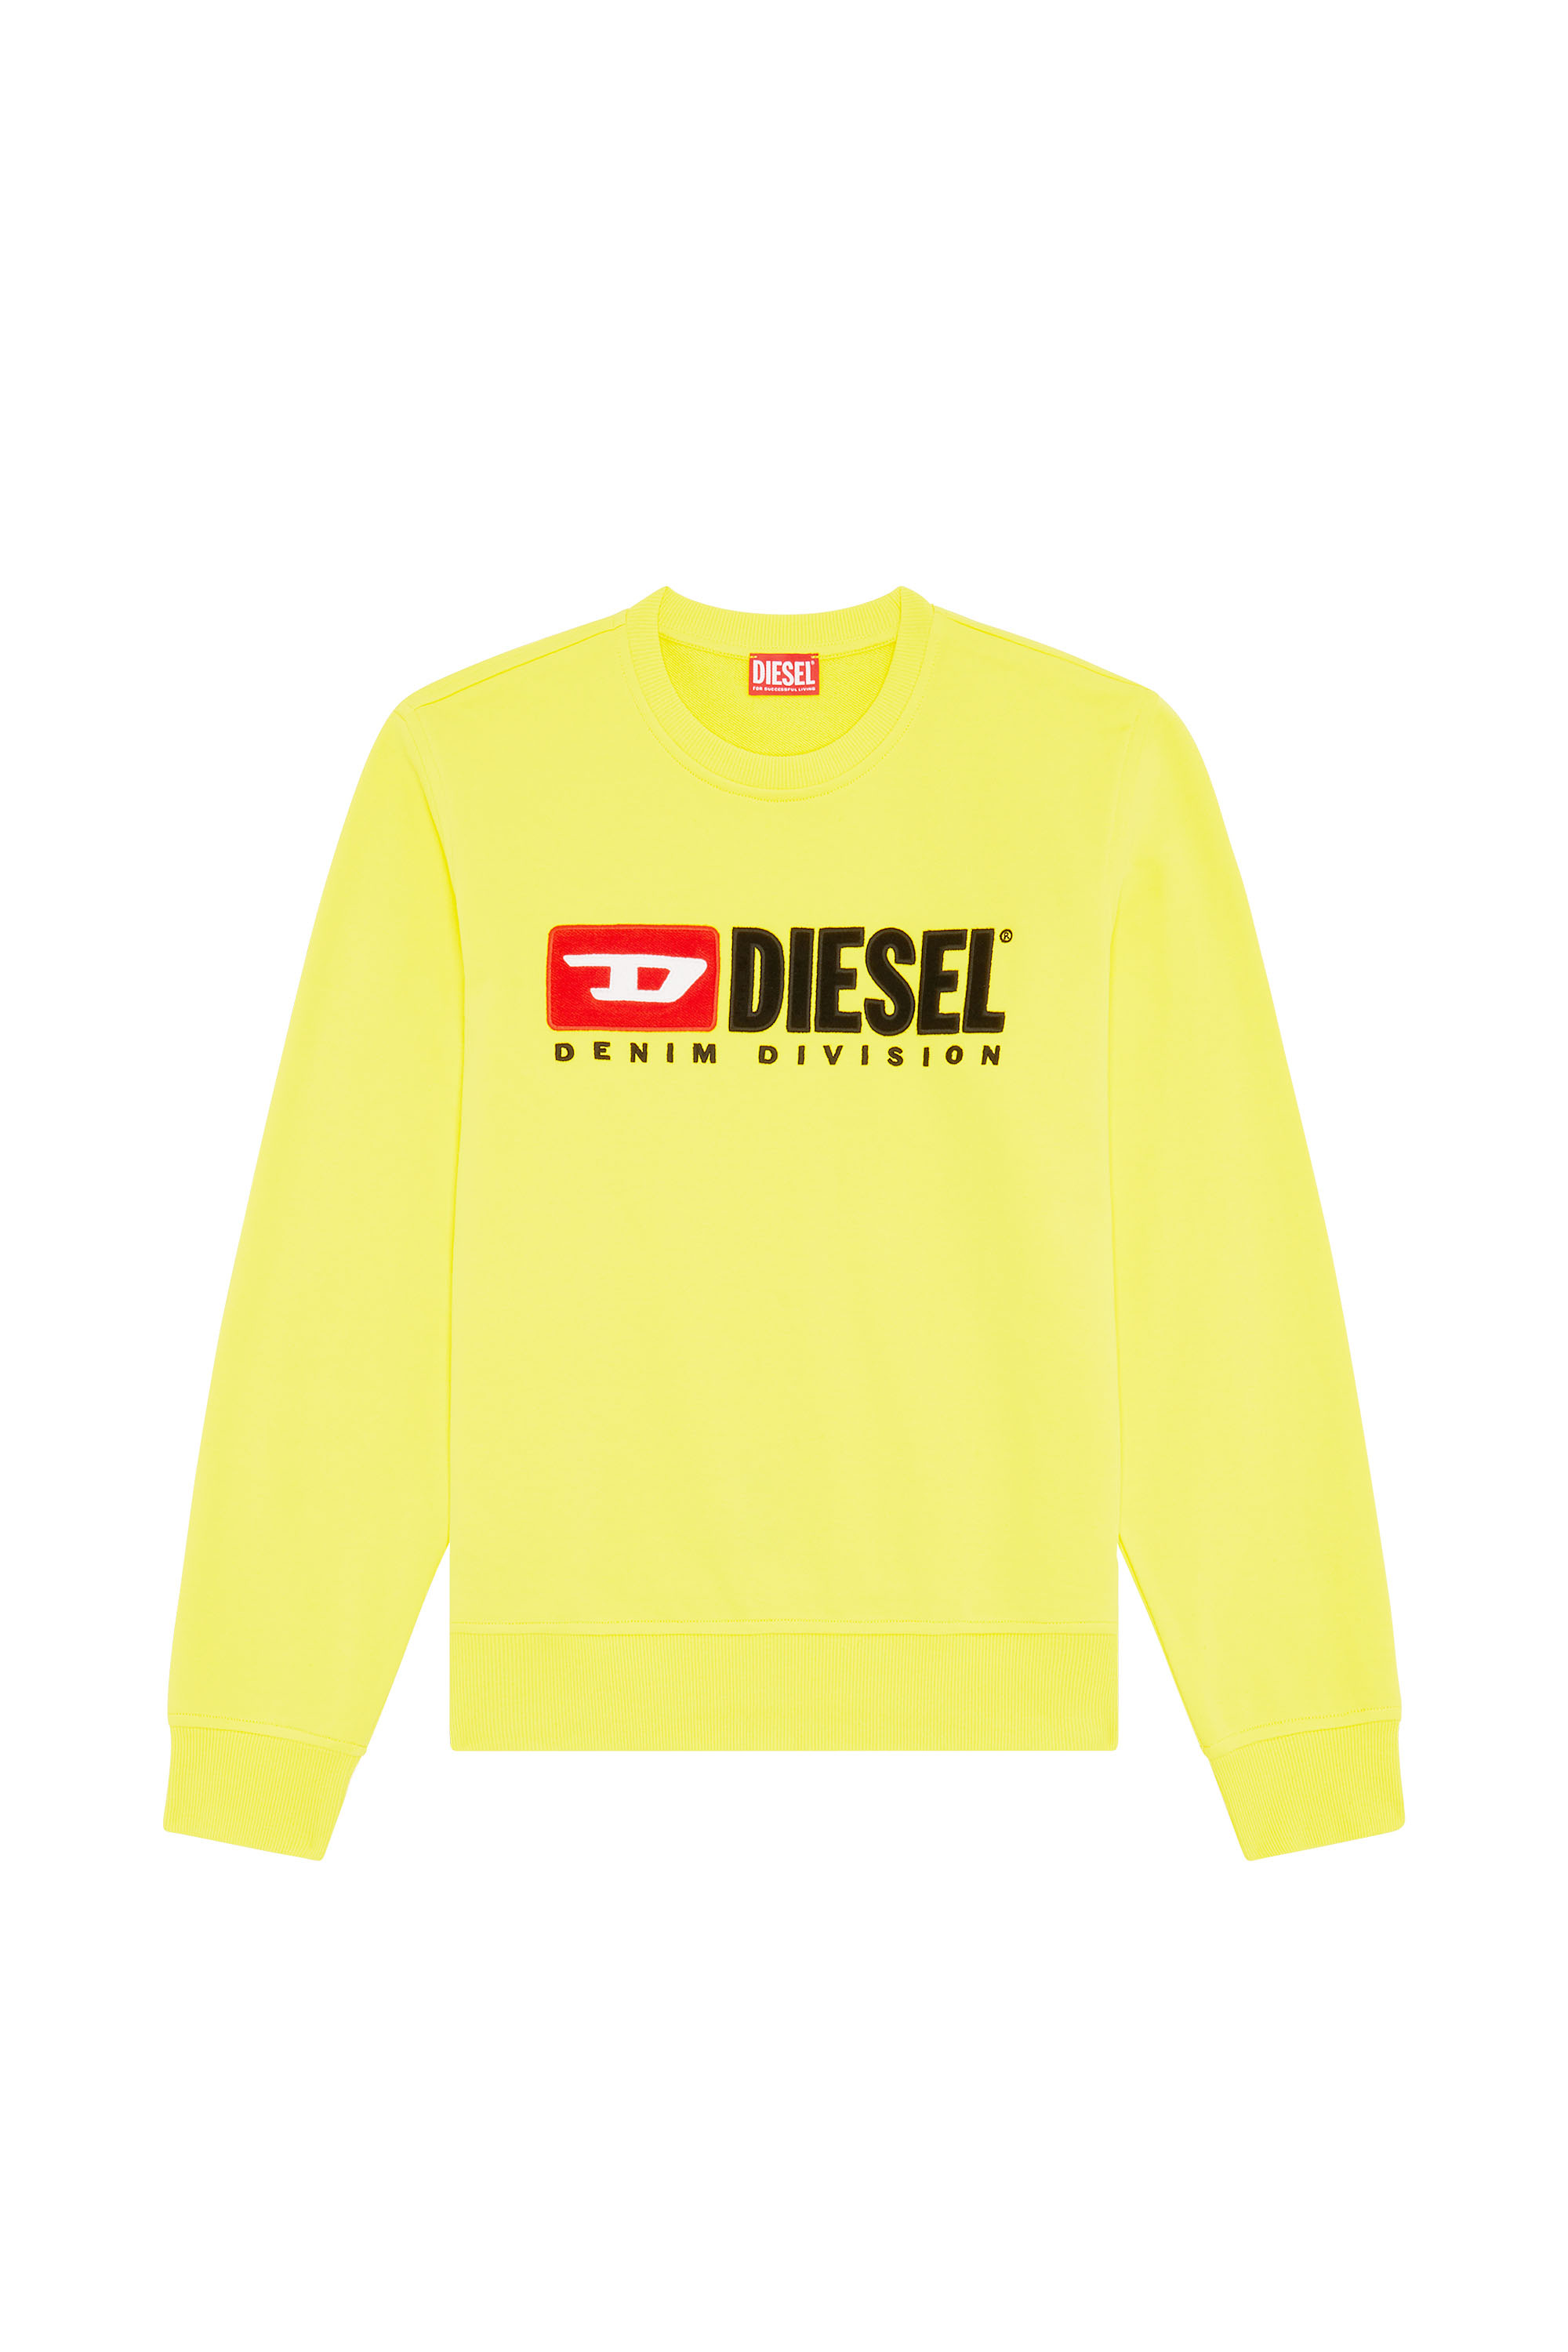 Diesel - S-GINN-DIV, Yellow Fluo - Image 1